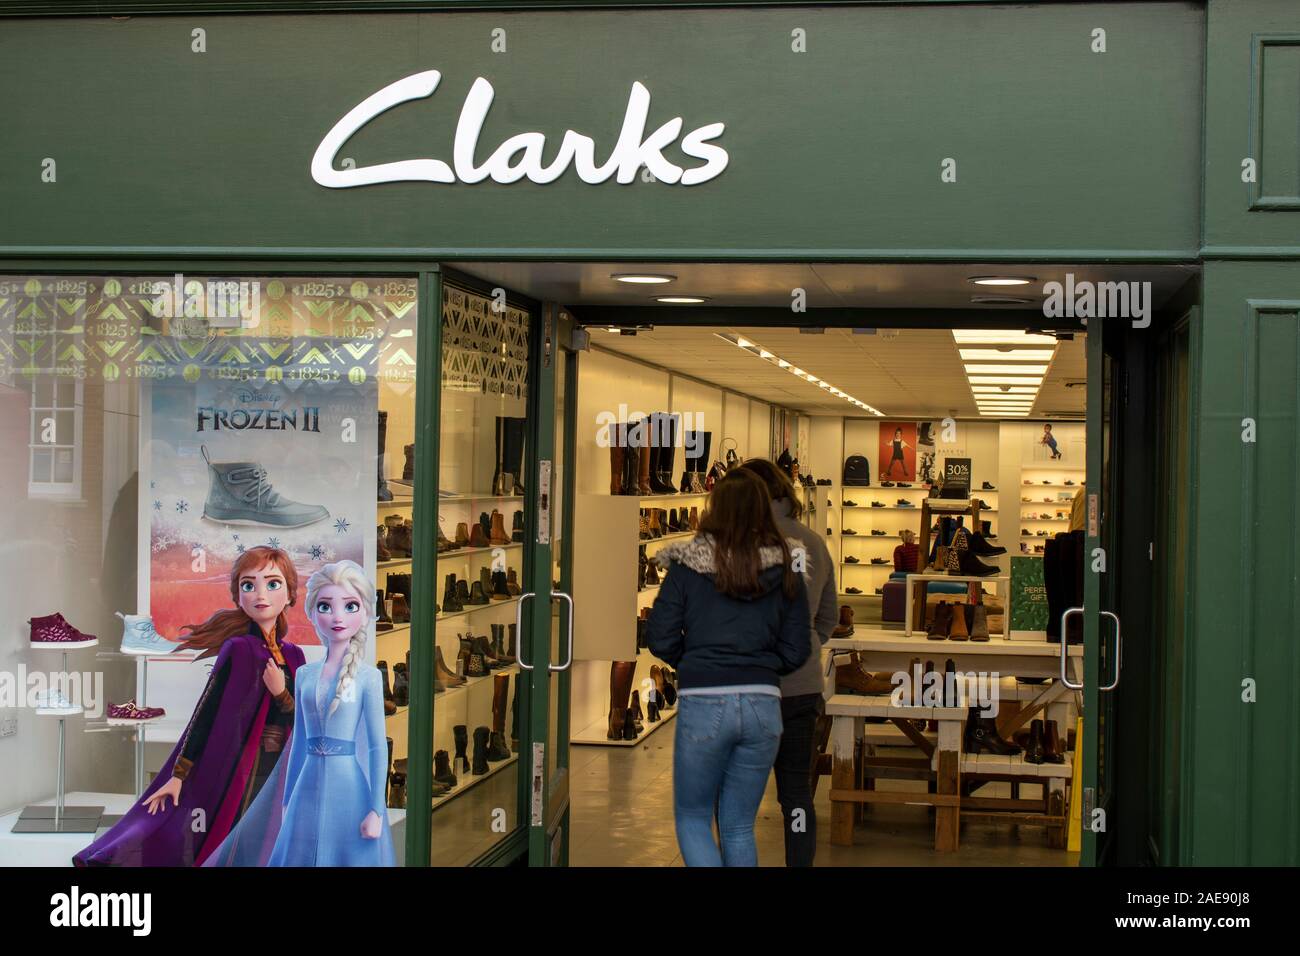 clarks shoe store locations nj